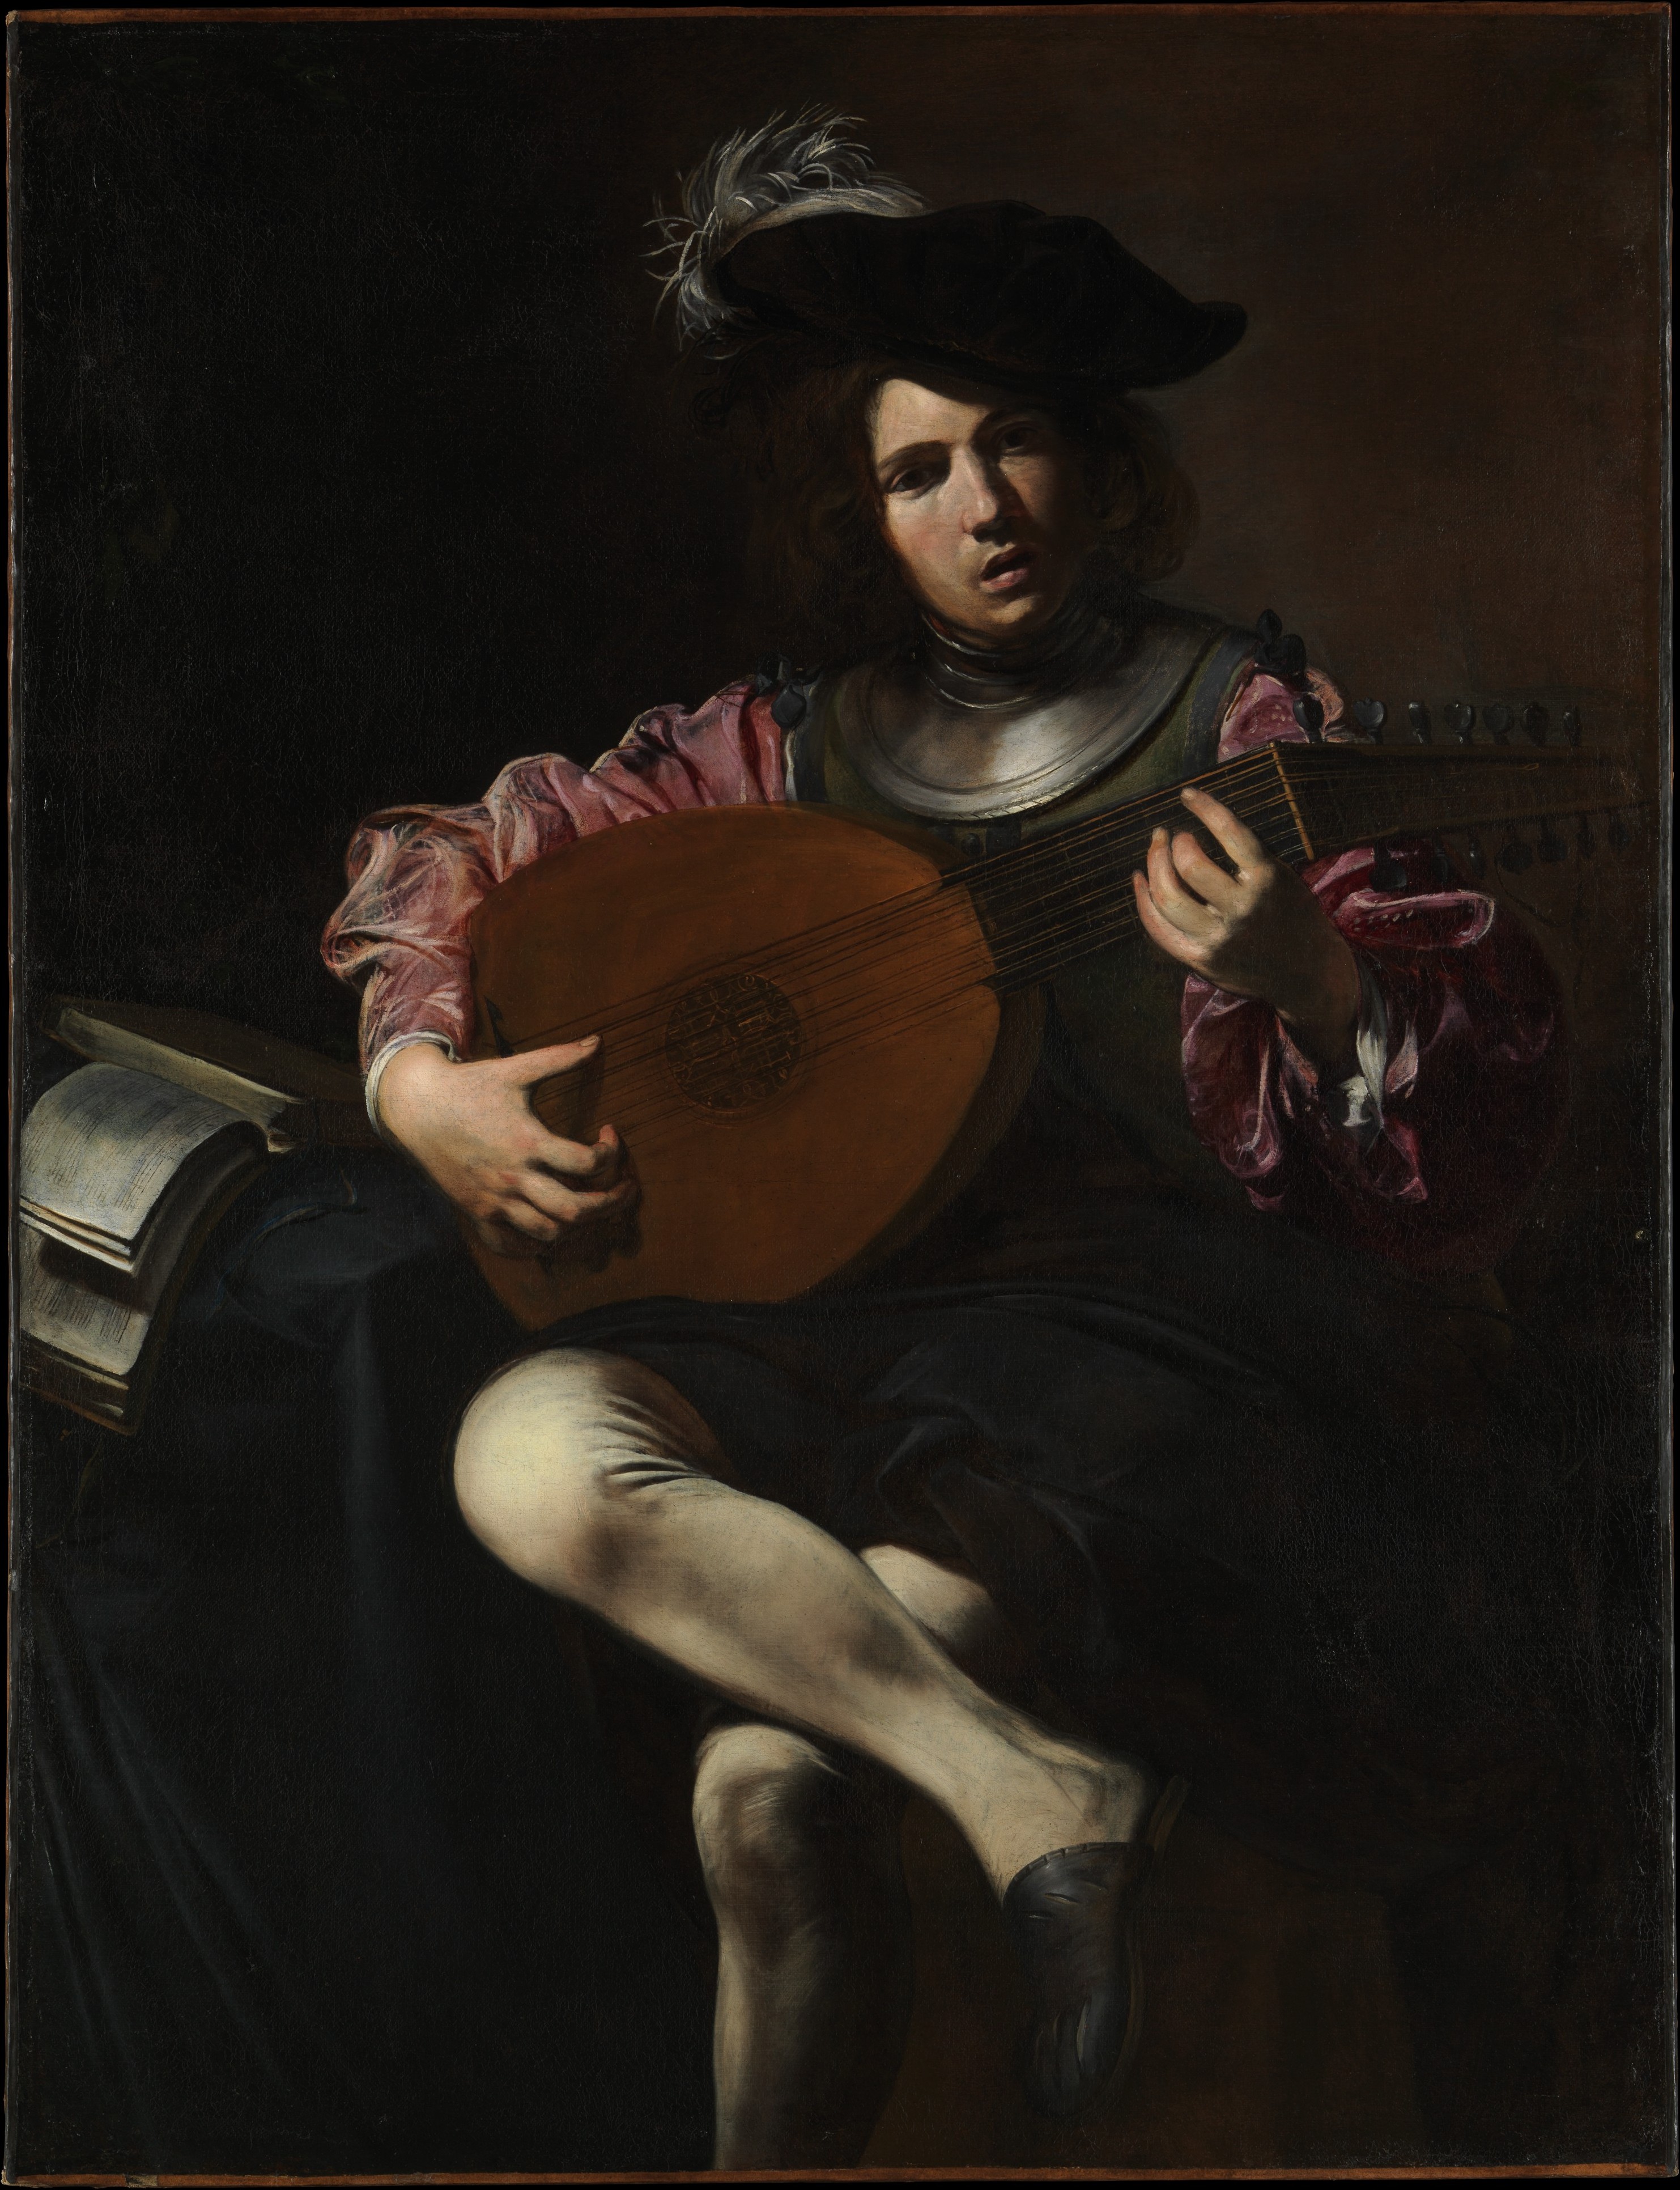 Lautenspieler by Valentin de Boulogne - ca. 1625–26 - 128.3 x 99.1 cm Metropolitan Museum of Art